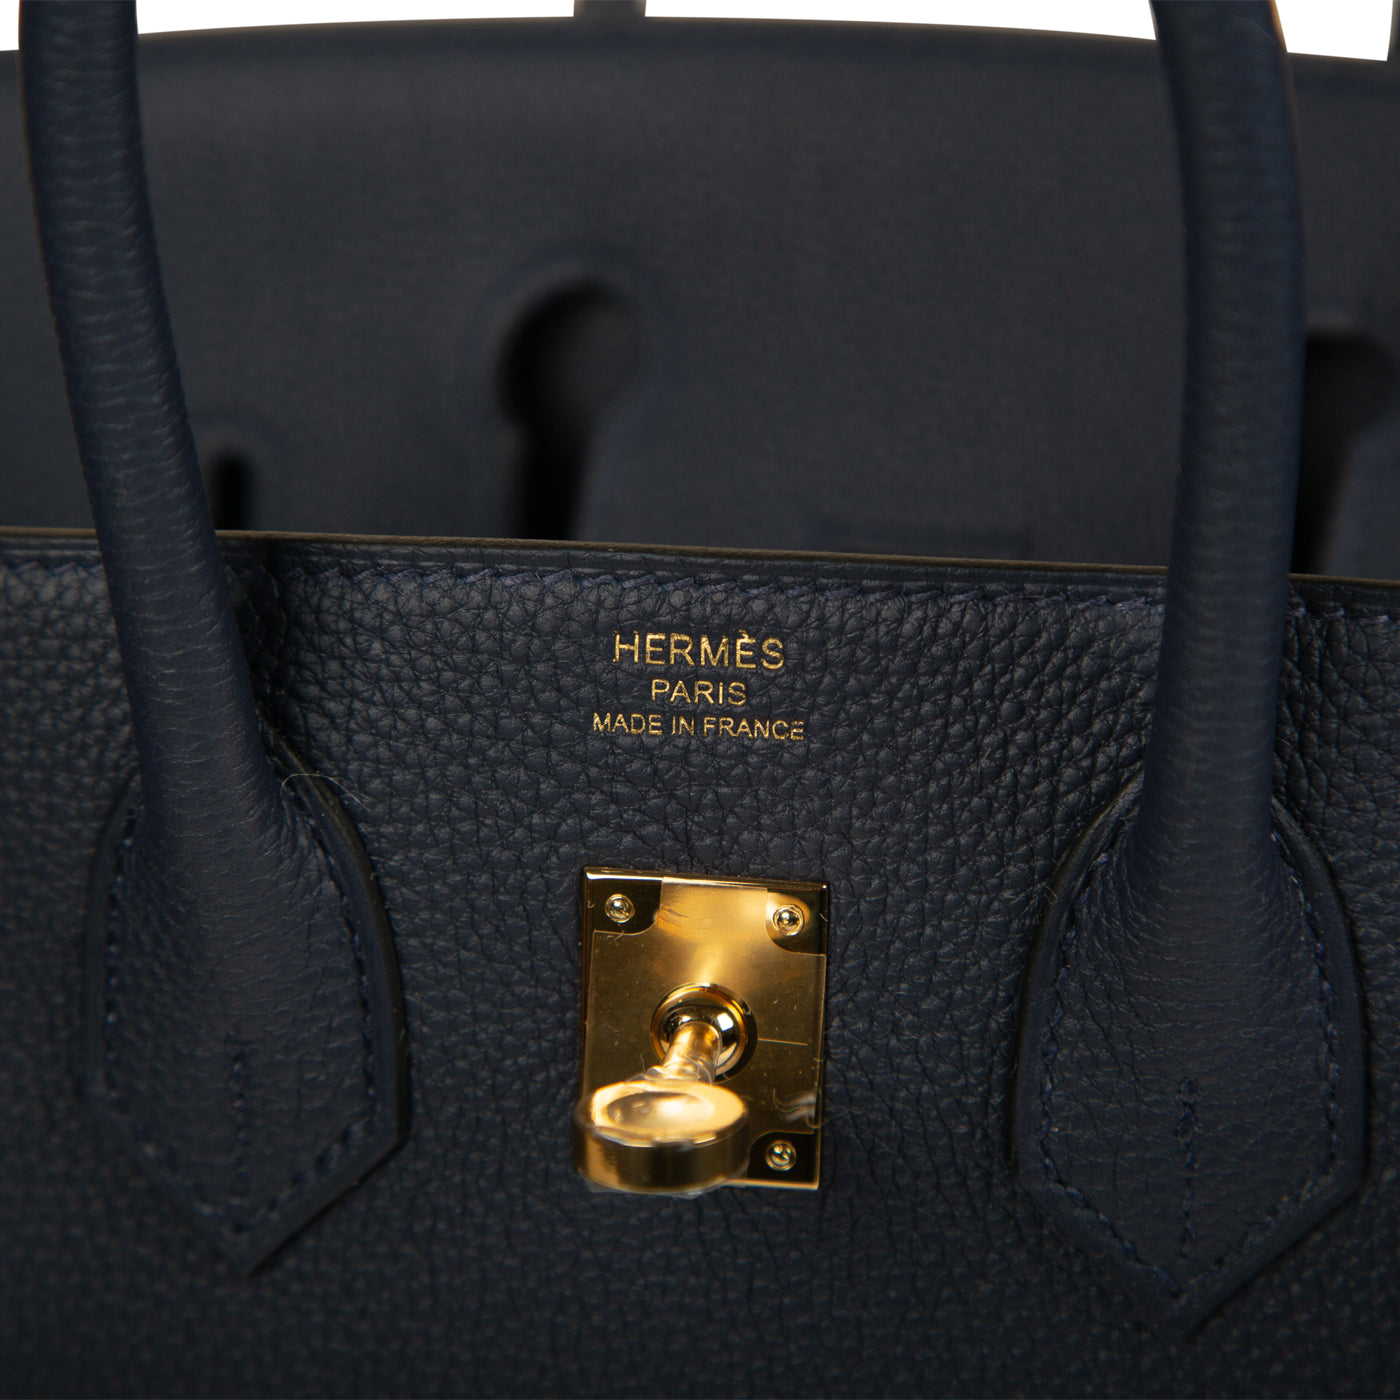 Hermes Birkin 25: Blue Leather Handbag